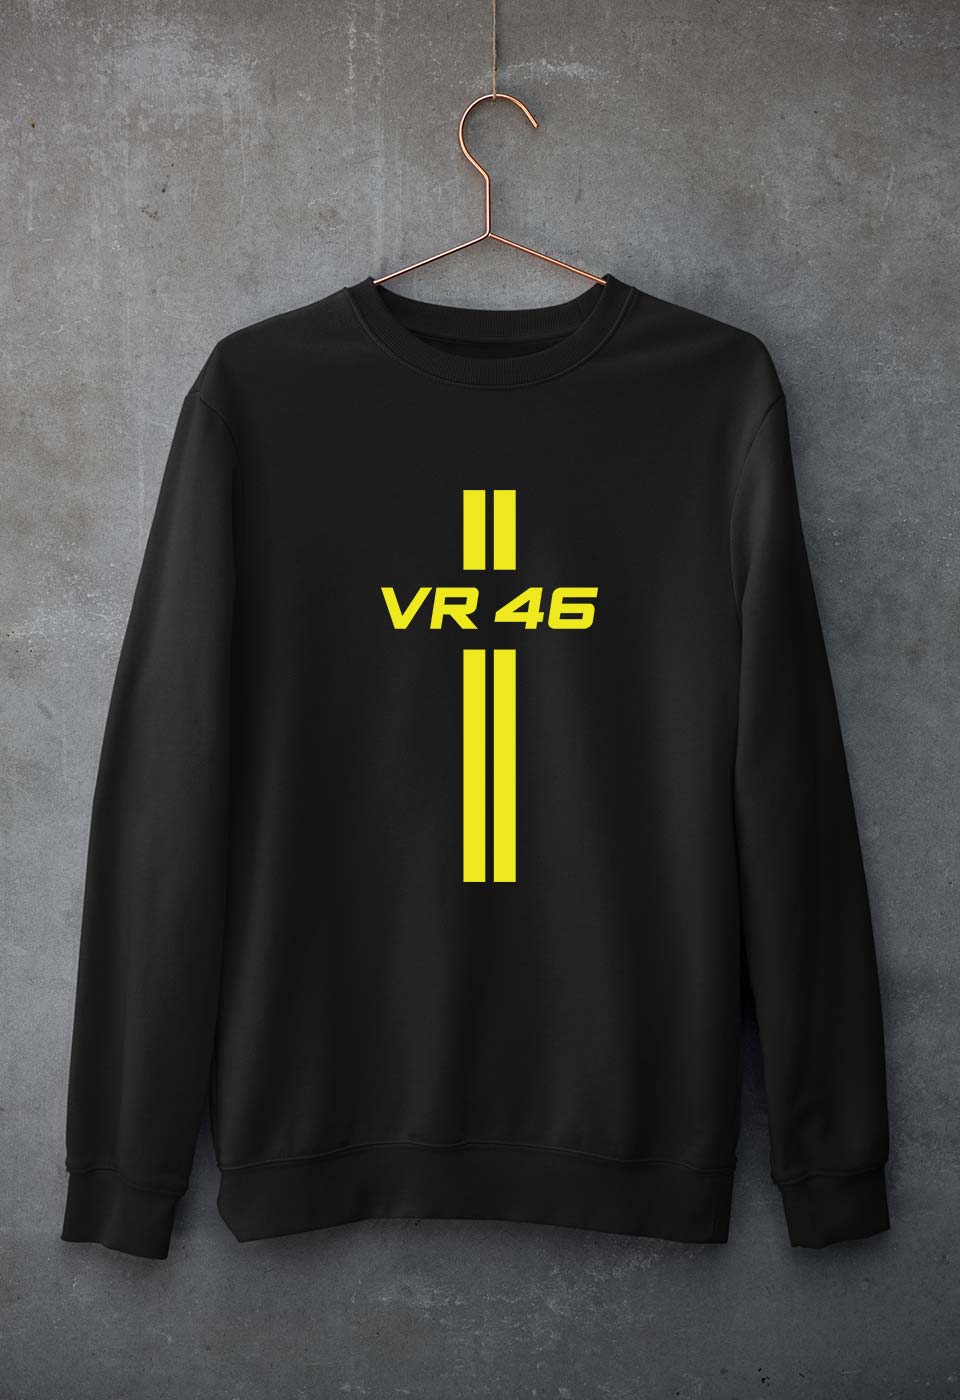 Valentino Rossi(VR 46) Unisex Sweatshirt for Men/Women-S(40 Inches)-Black-Ektarfa.online